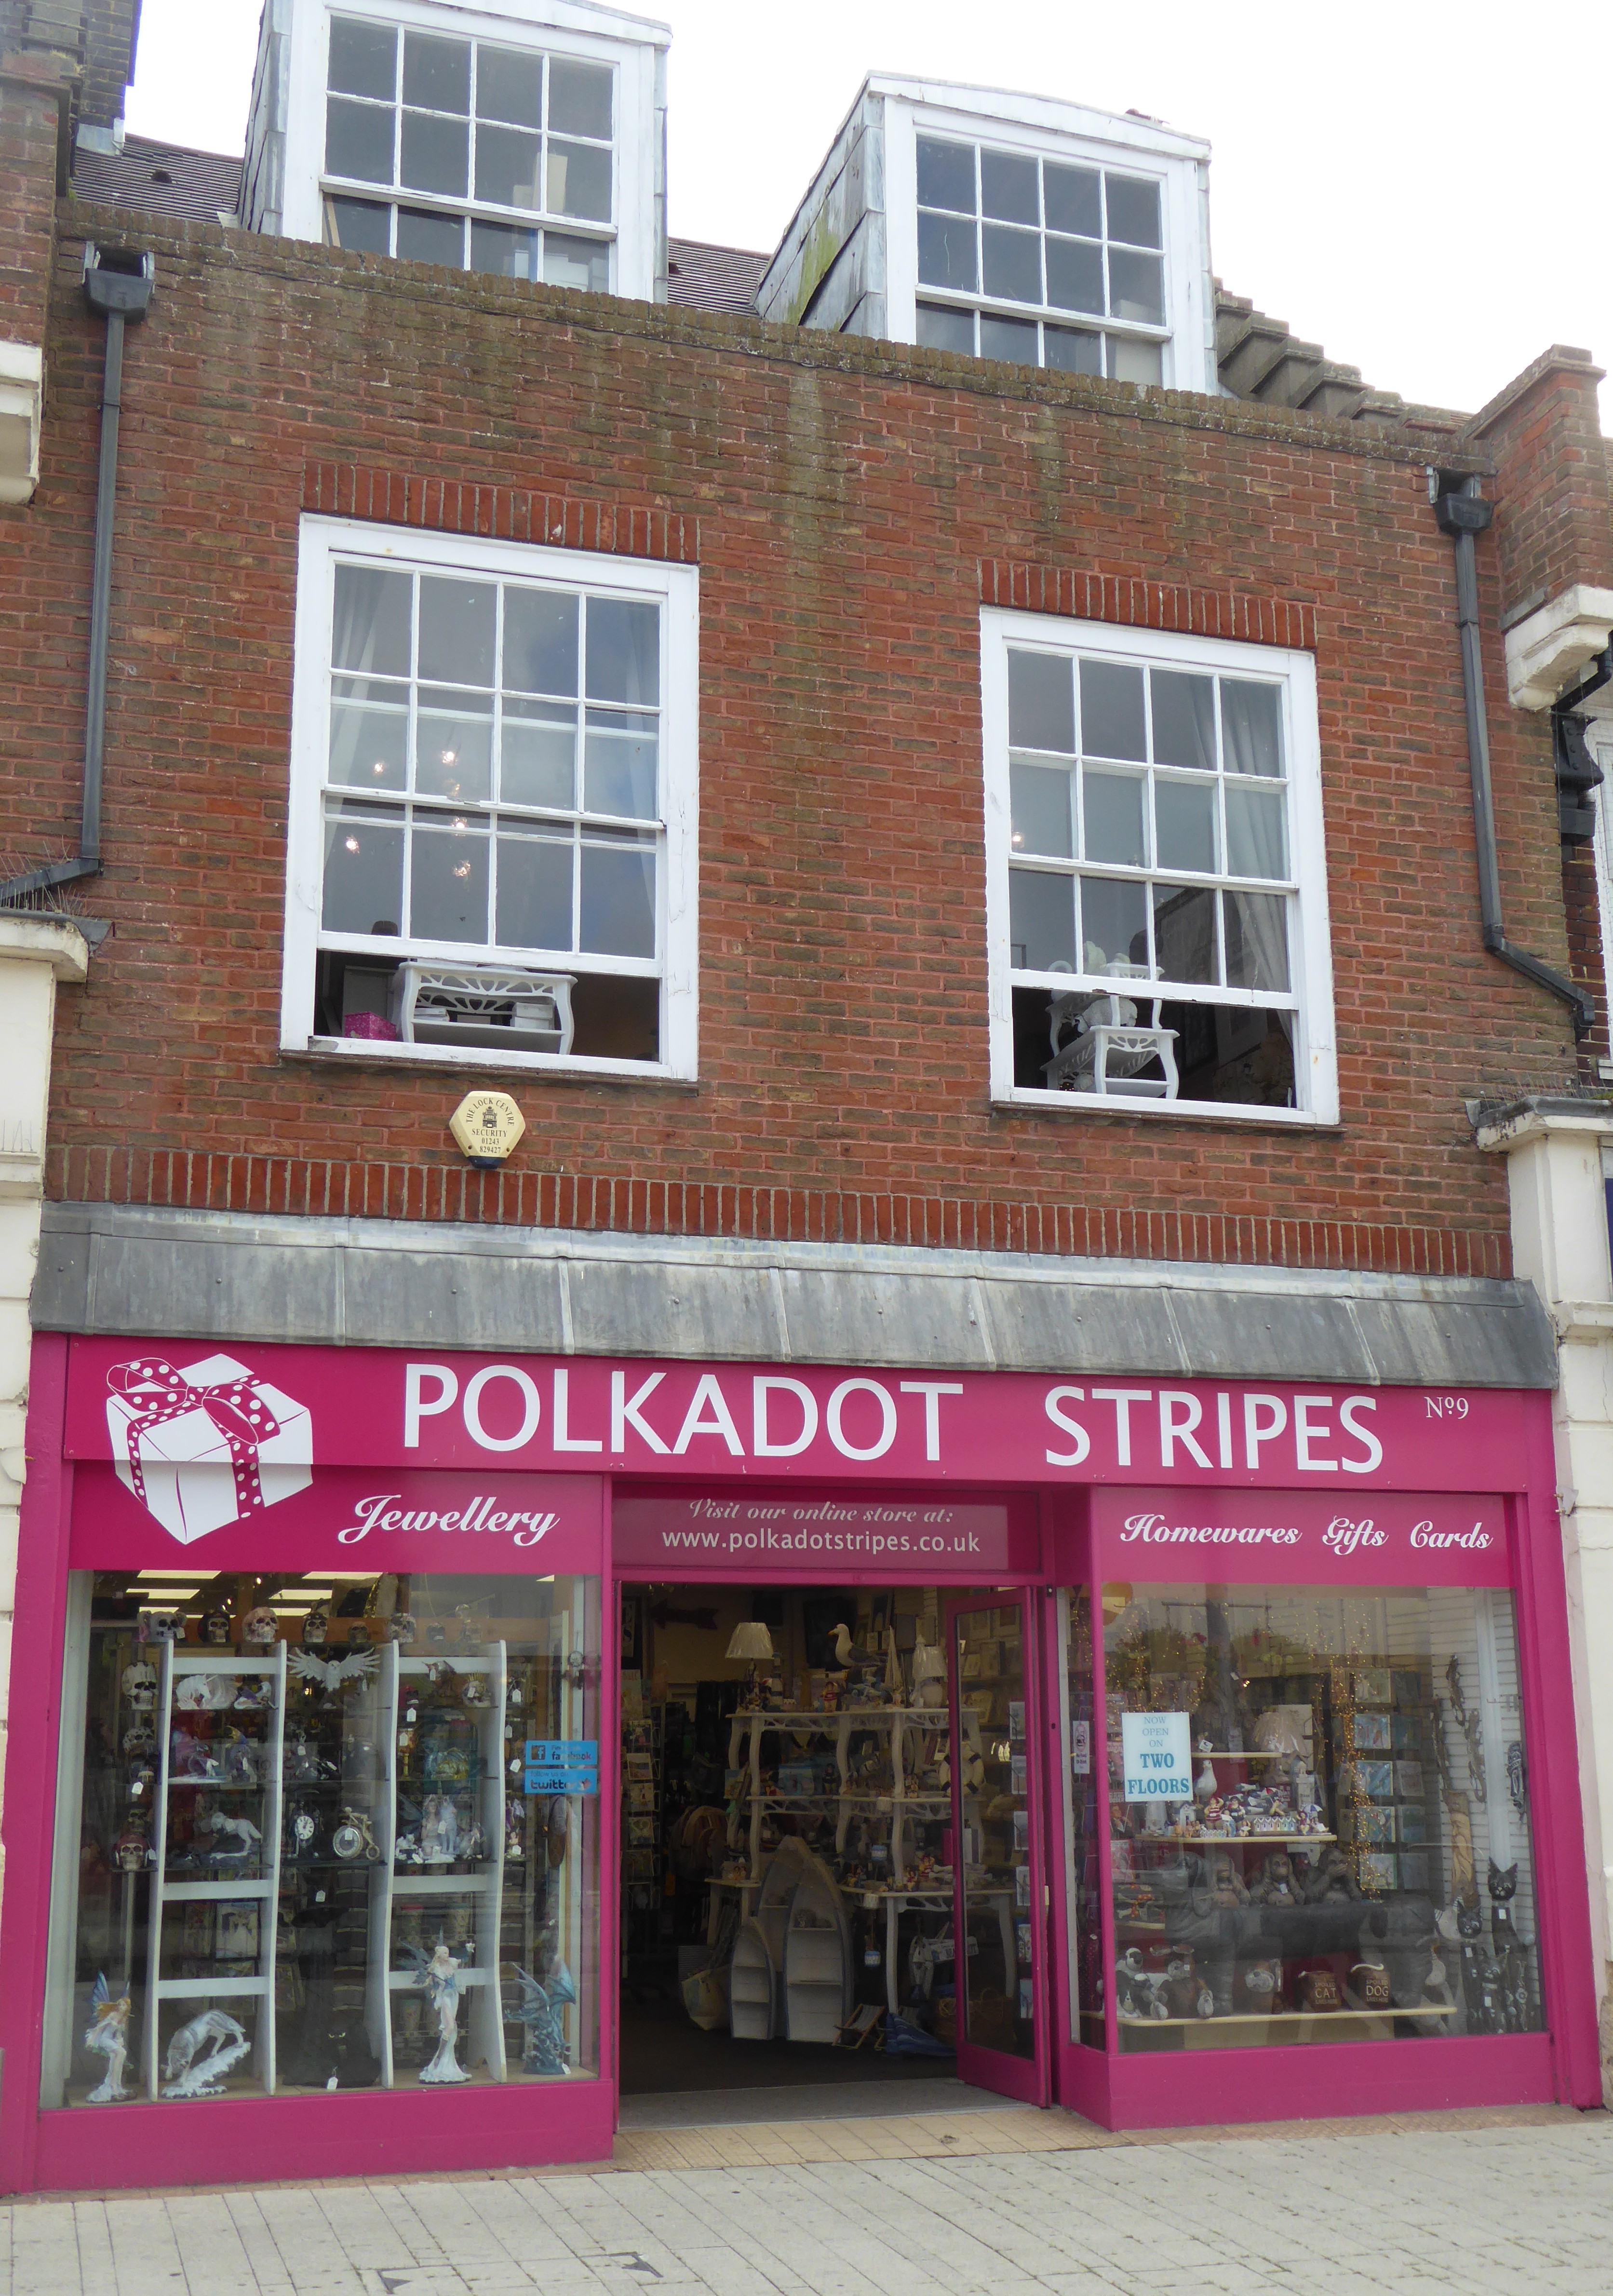 Polkadot Stripes Shop Front full height Aug 2019